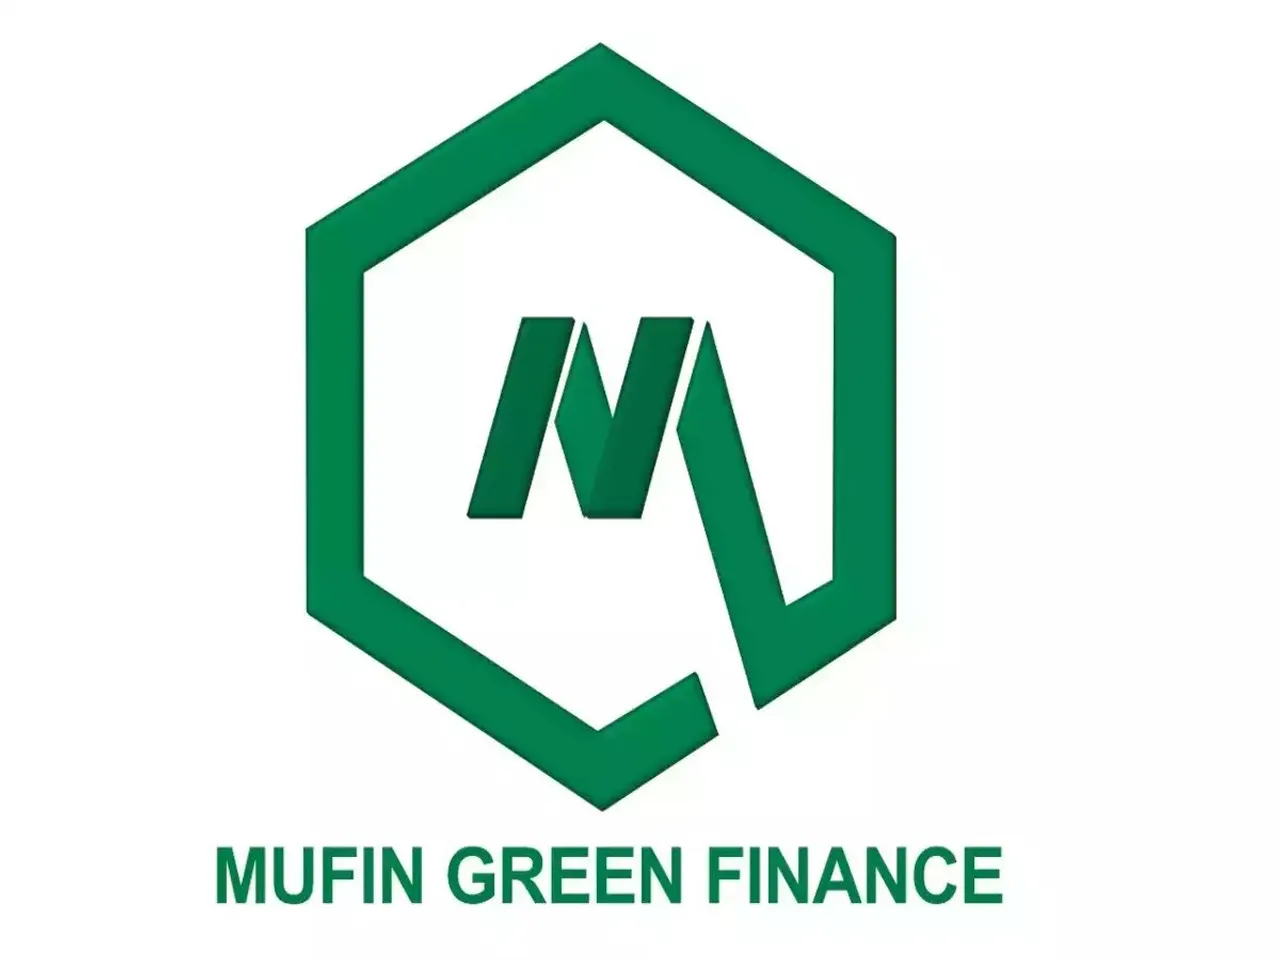 EV financing startup Mufin Green Finance raises $7M in green bond